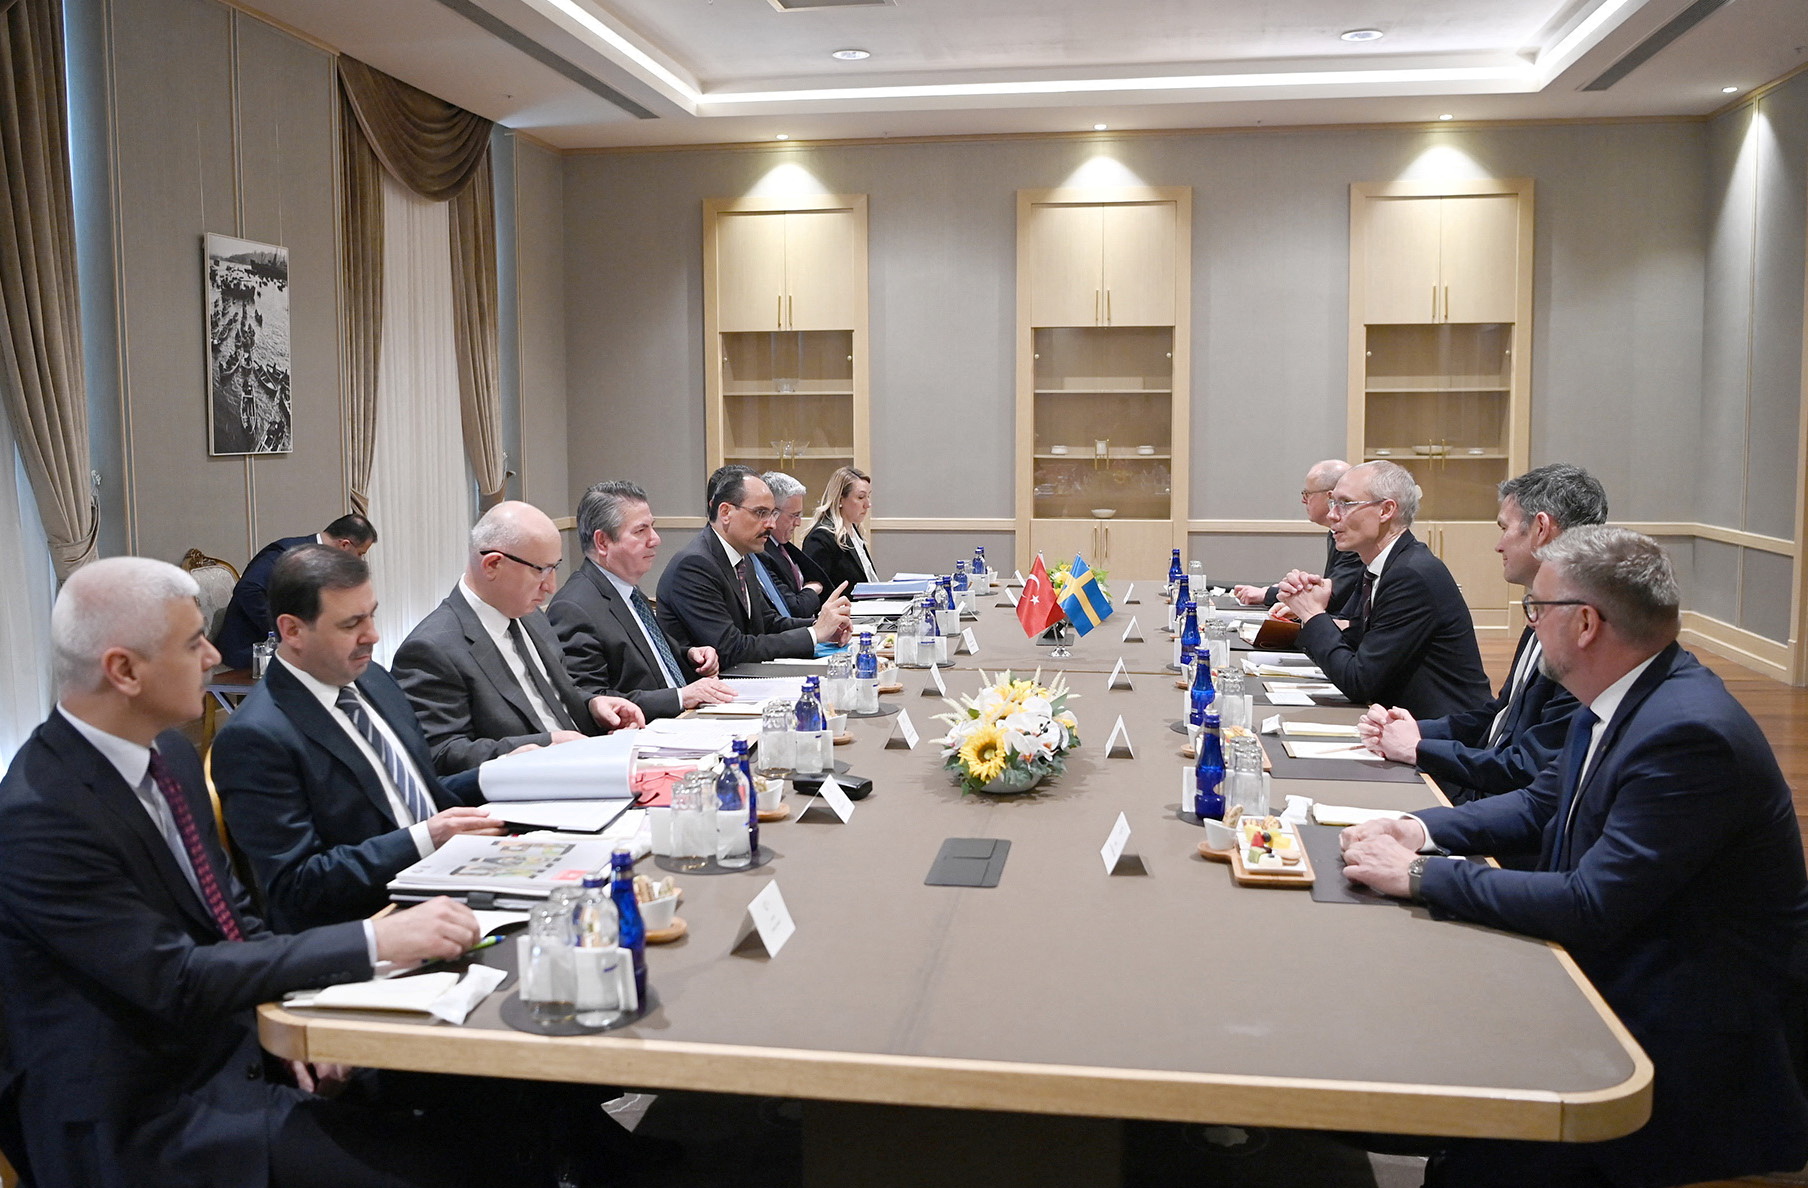 Ibrahim Kalin, Turkish President Erdogan's spokesman and chief foreign policy adviser, meets with Swedish delegation in Ankara